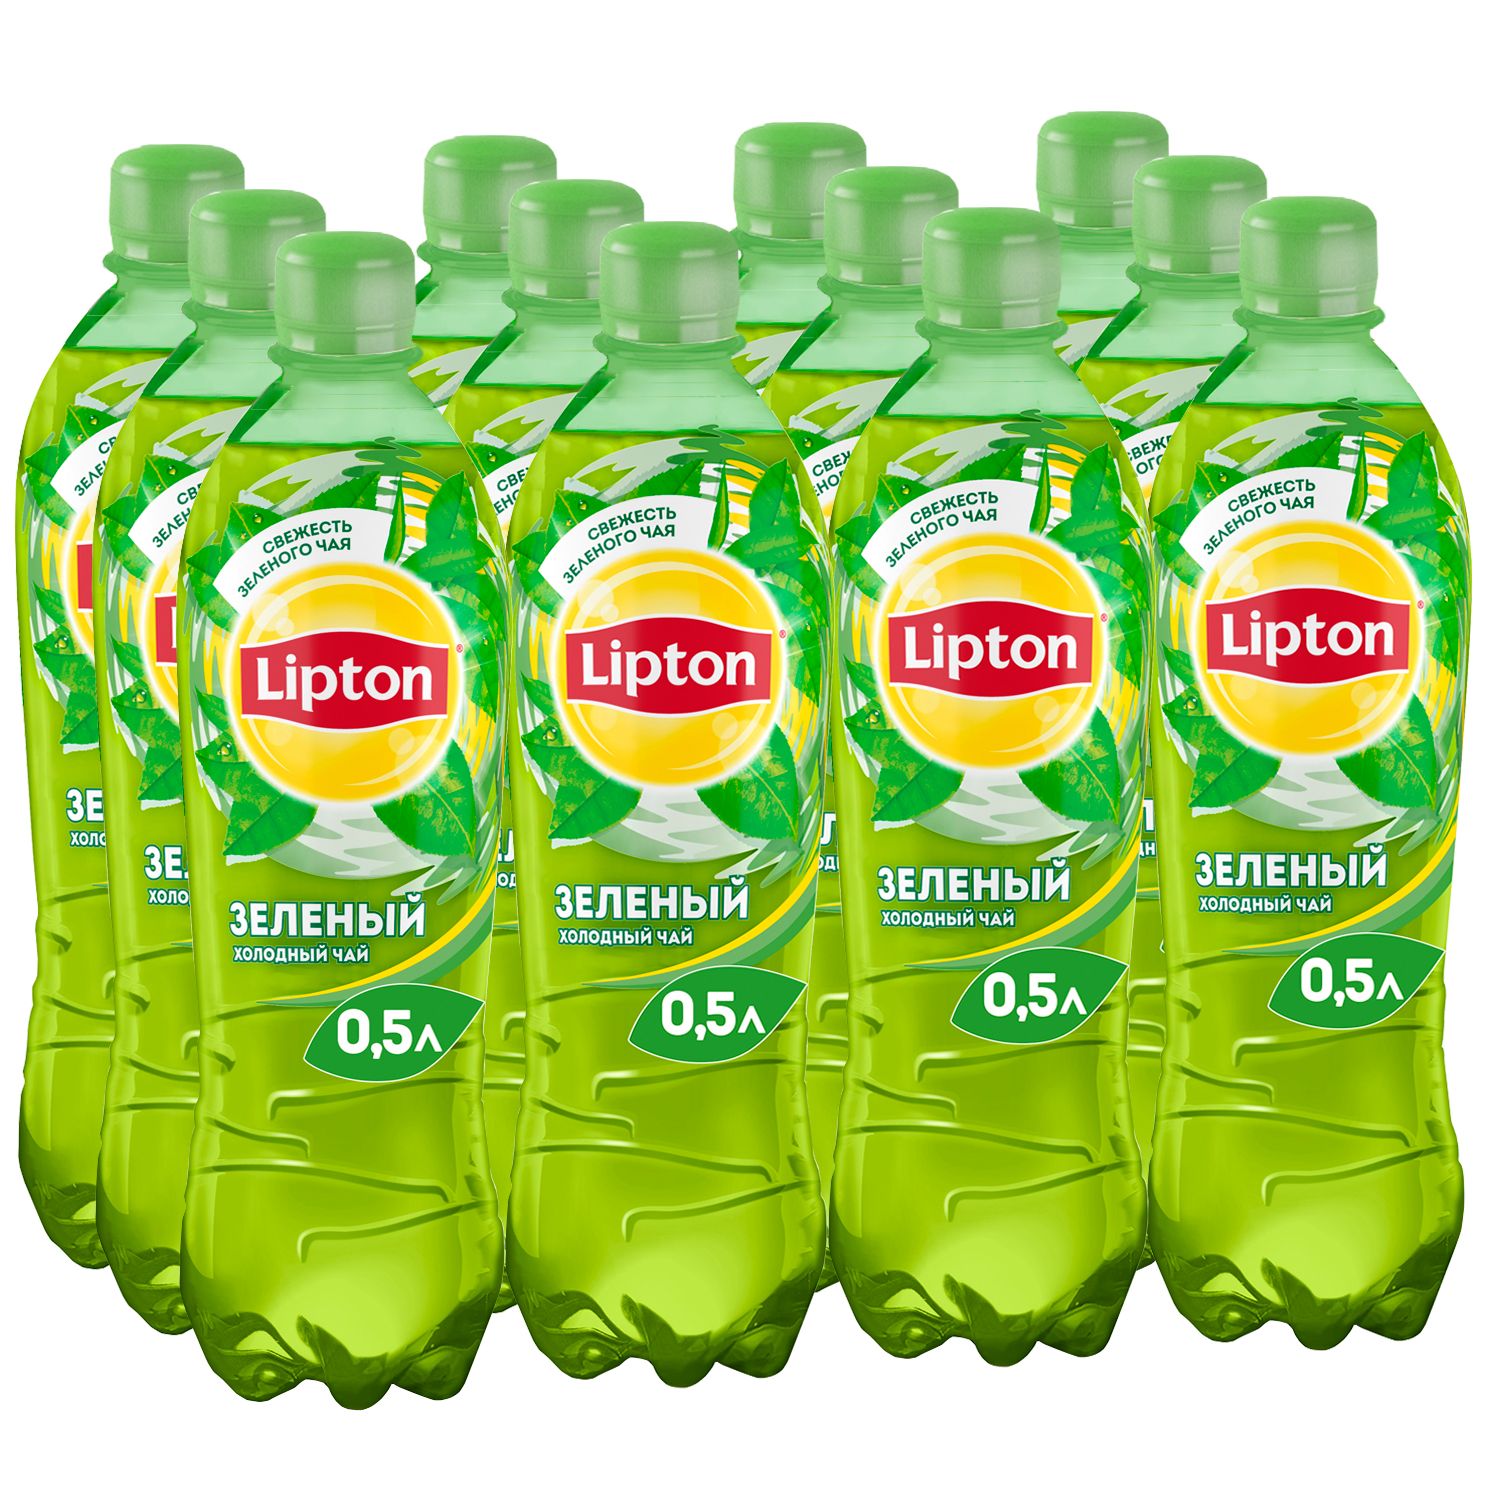 Картинки липтона. Липтон 0,5 зеленый. Липтон зеленый чай 0.5. Липтон зелёный холодный чай. Зеленый Липтон зеленый Липтон.